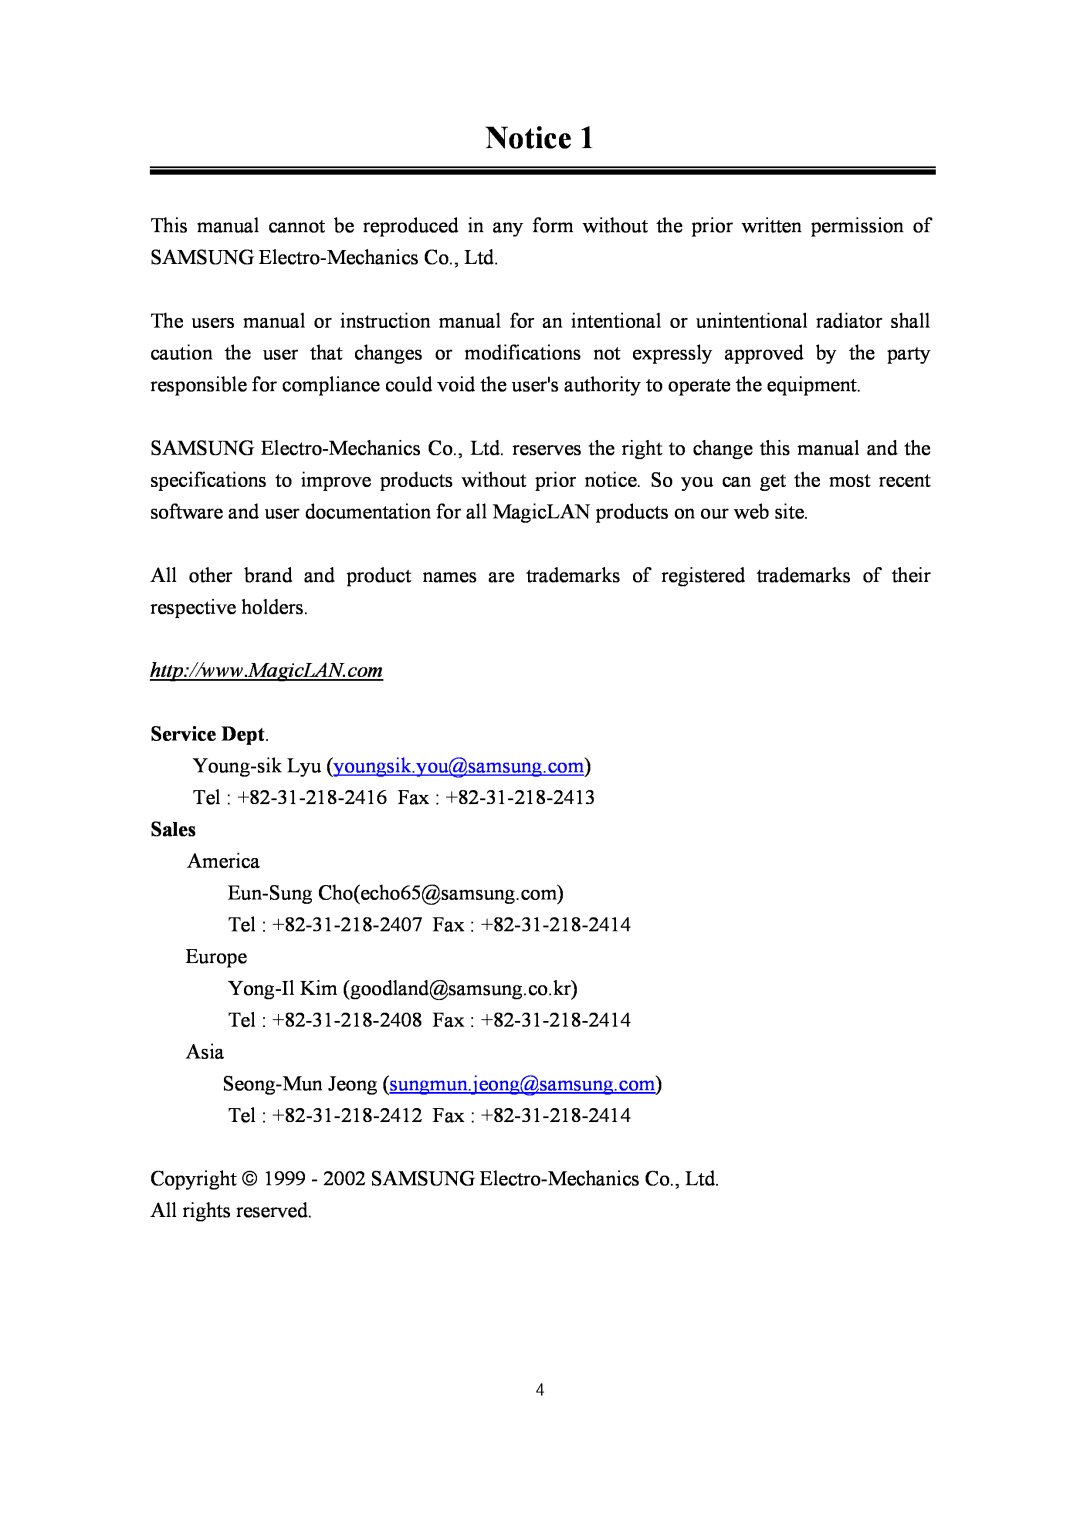 Samsung SWL-2210M, SWL-2210P user manual Service Dept, Sales 